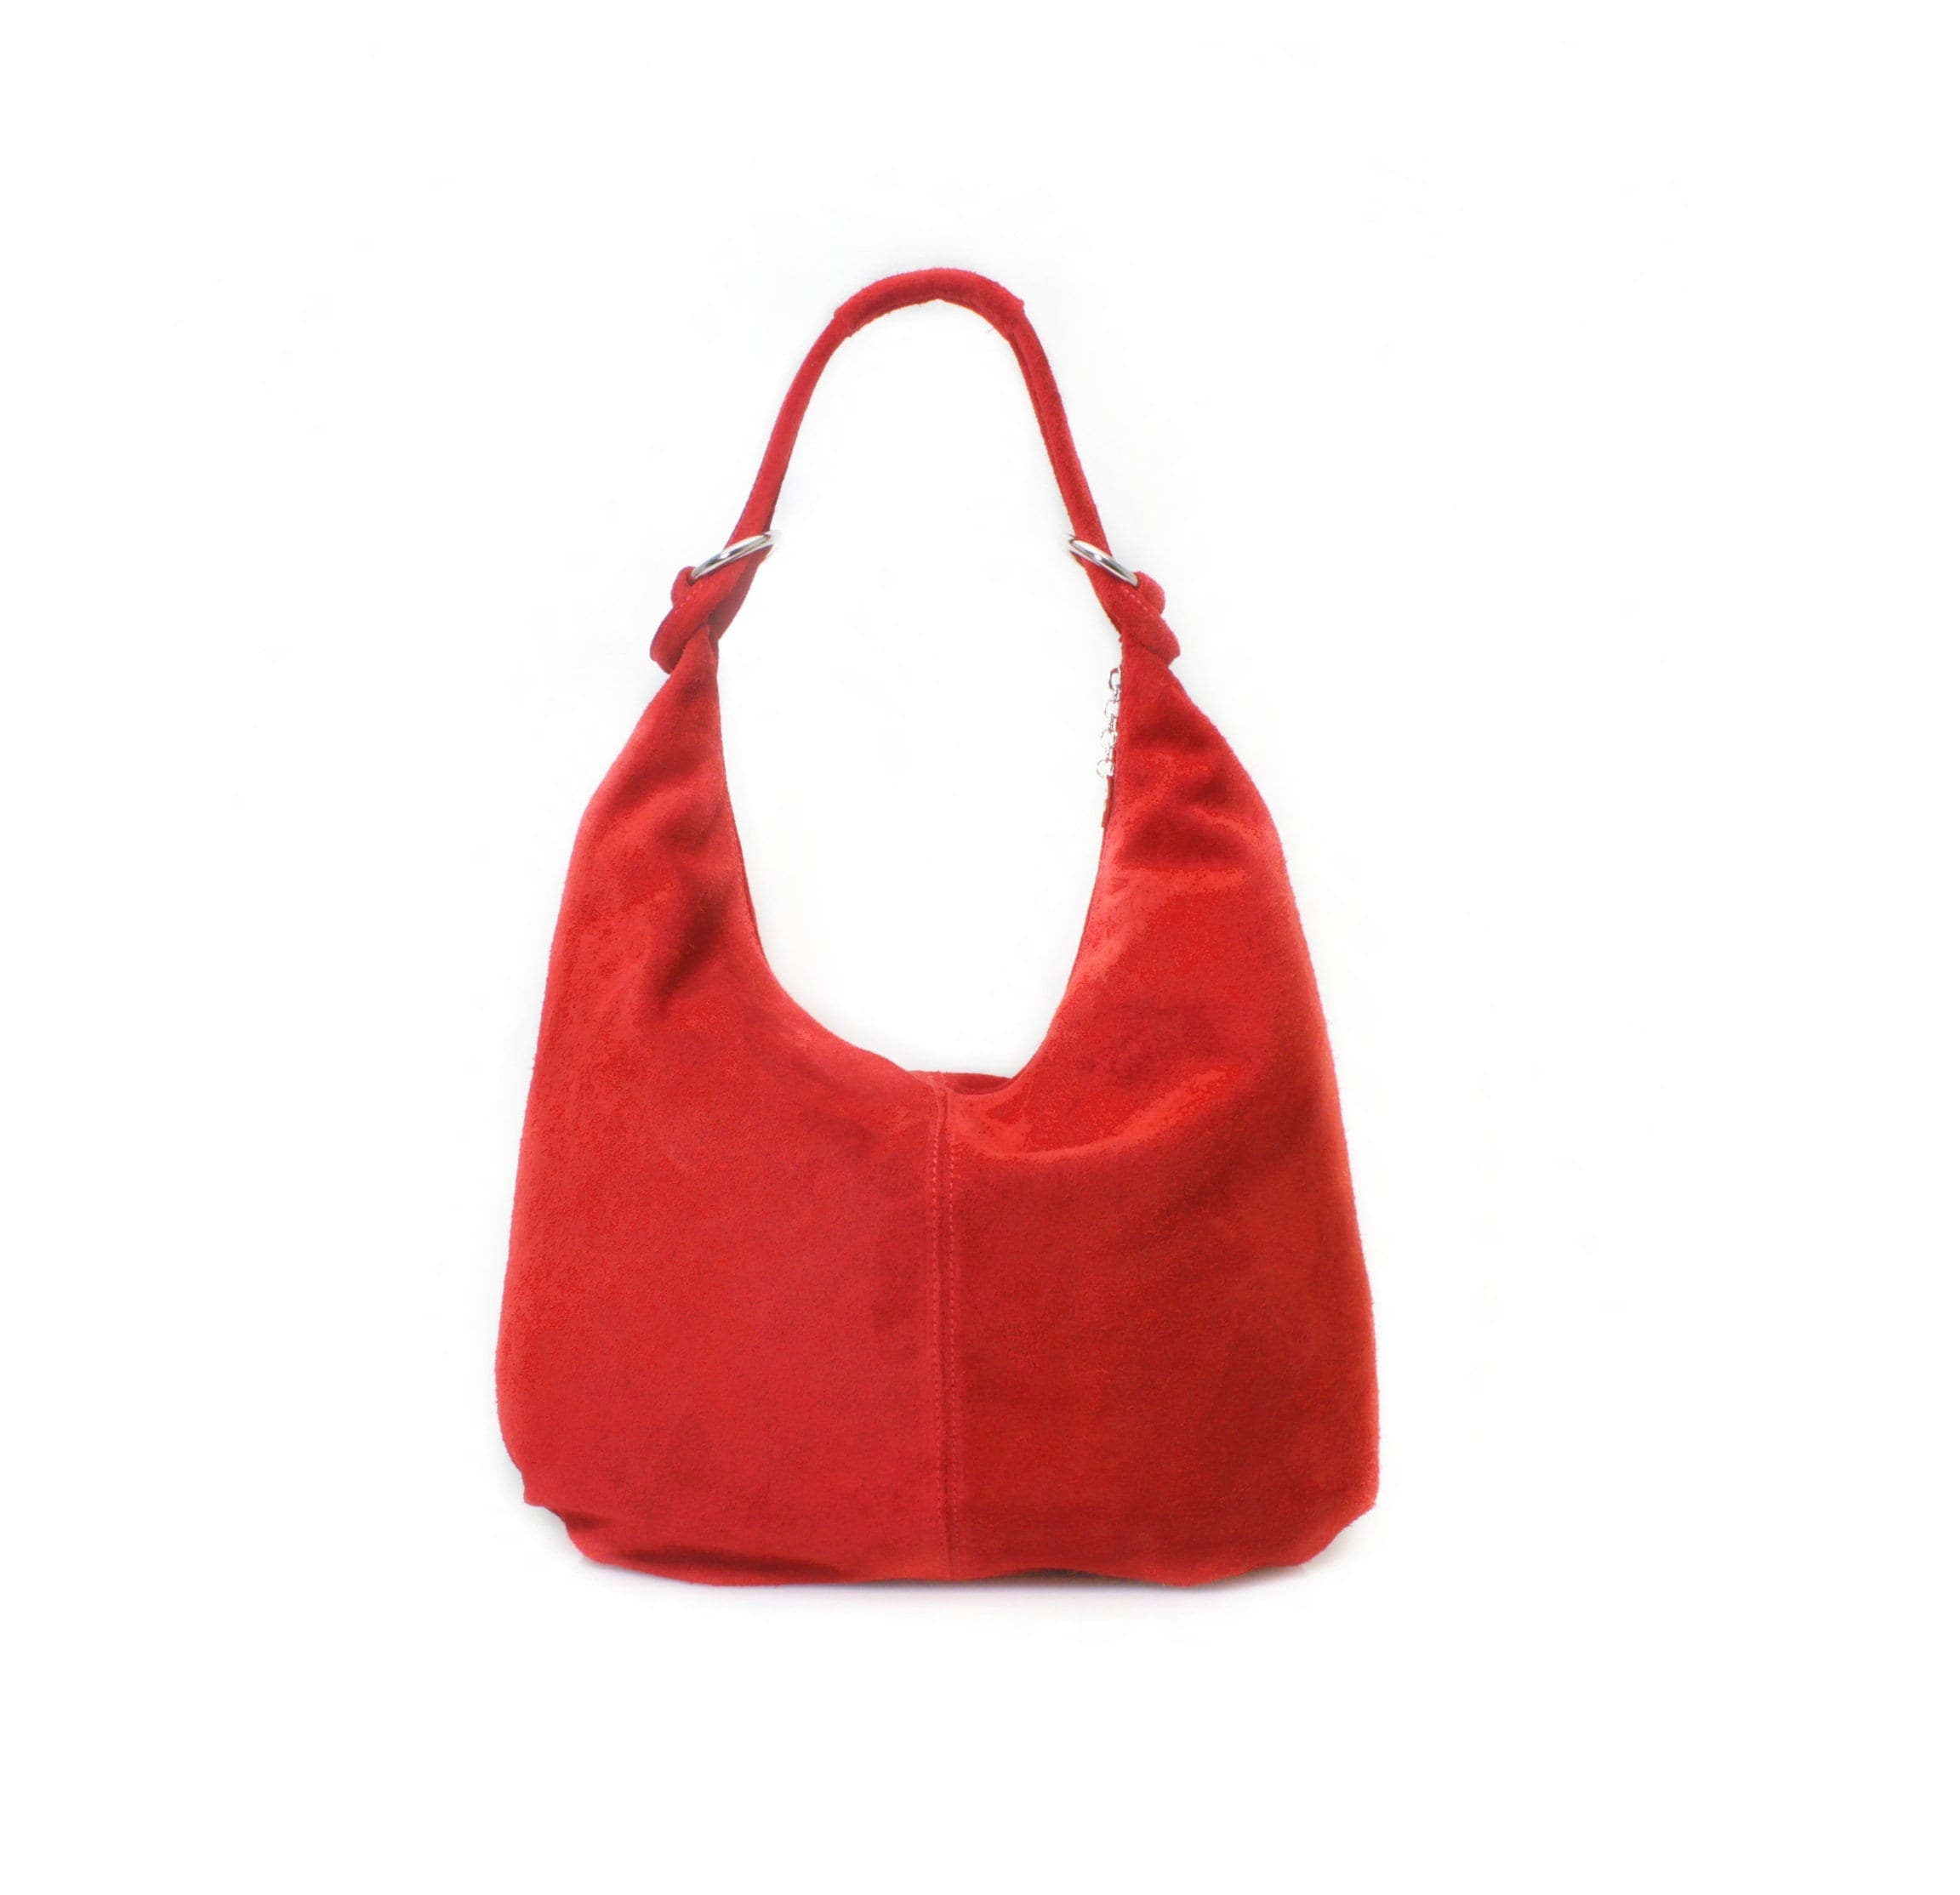 Shoulder bags Bottega Veneta - Loop Intrecciato nappa leather hobo large bag  - 467094VCO711000